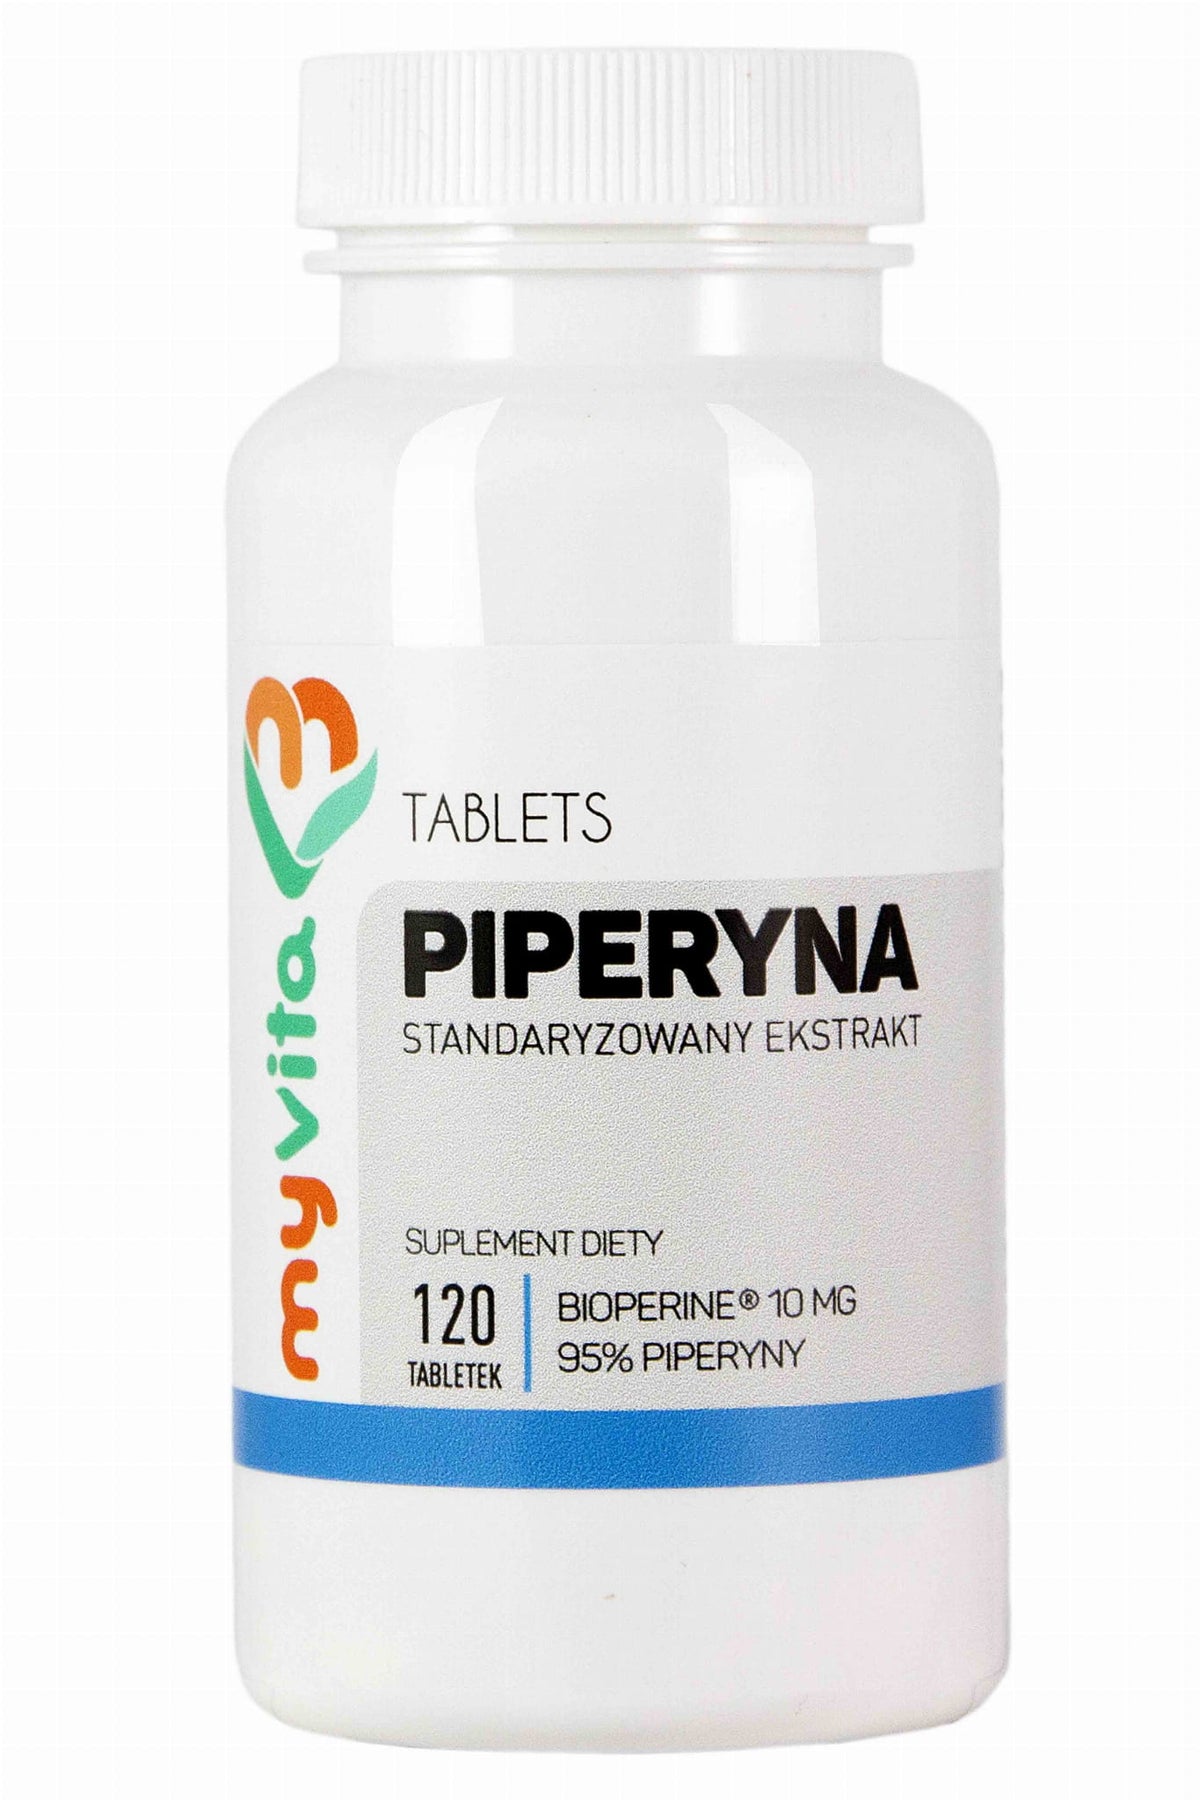 Extrait de pipérine 10mg bioperine 120 comprimés MYVITA